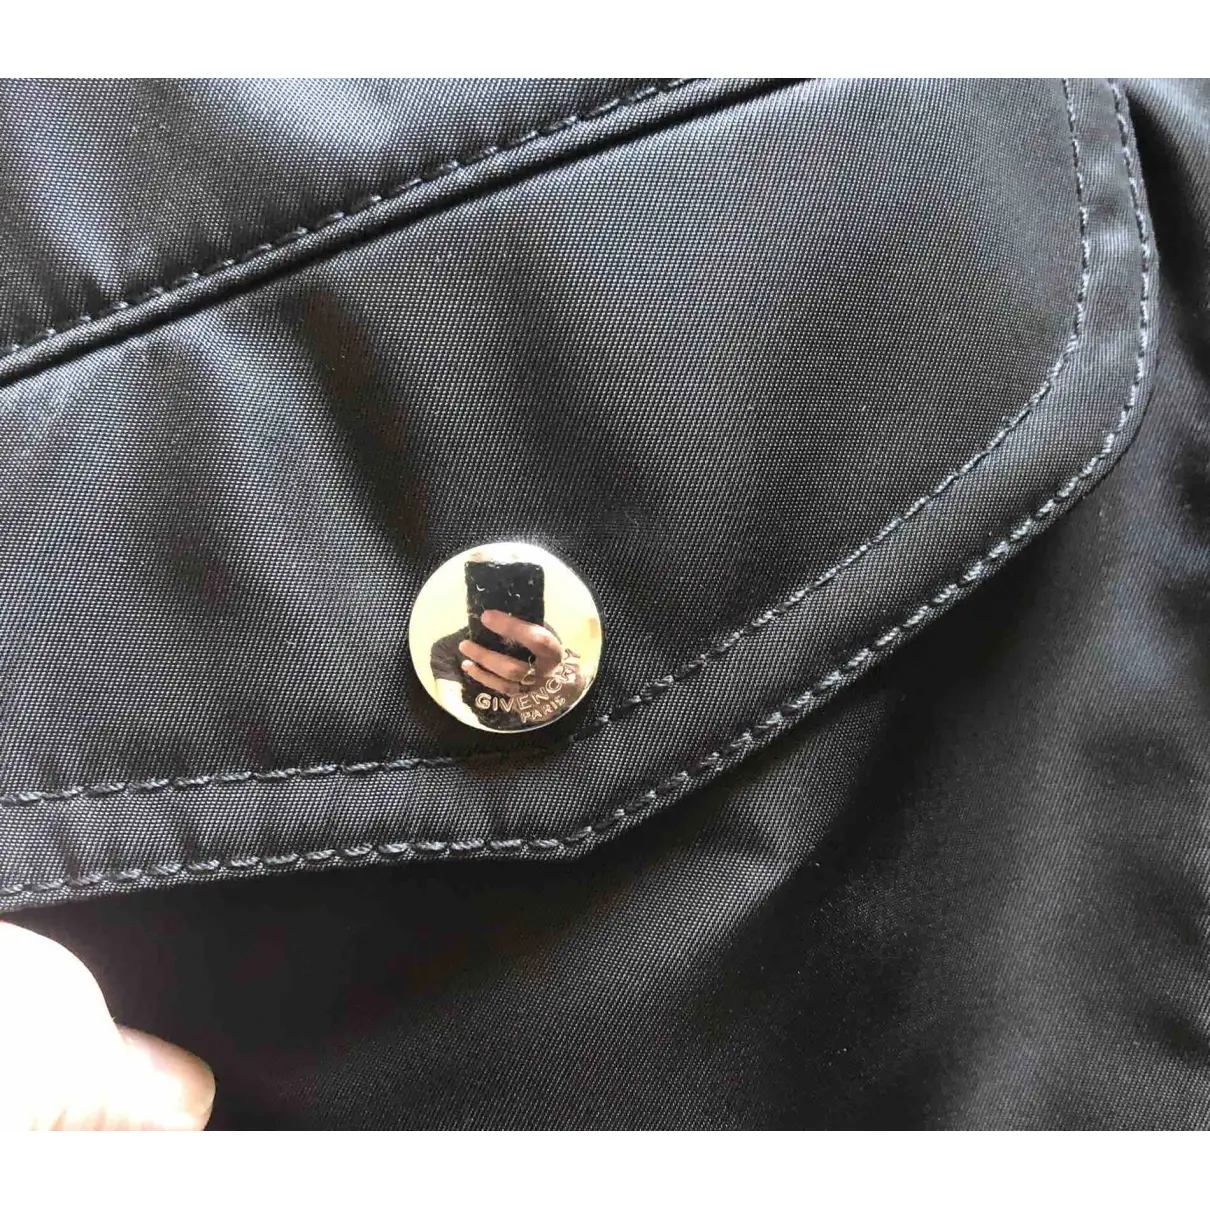 Jacket Givenchy